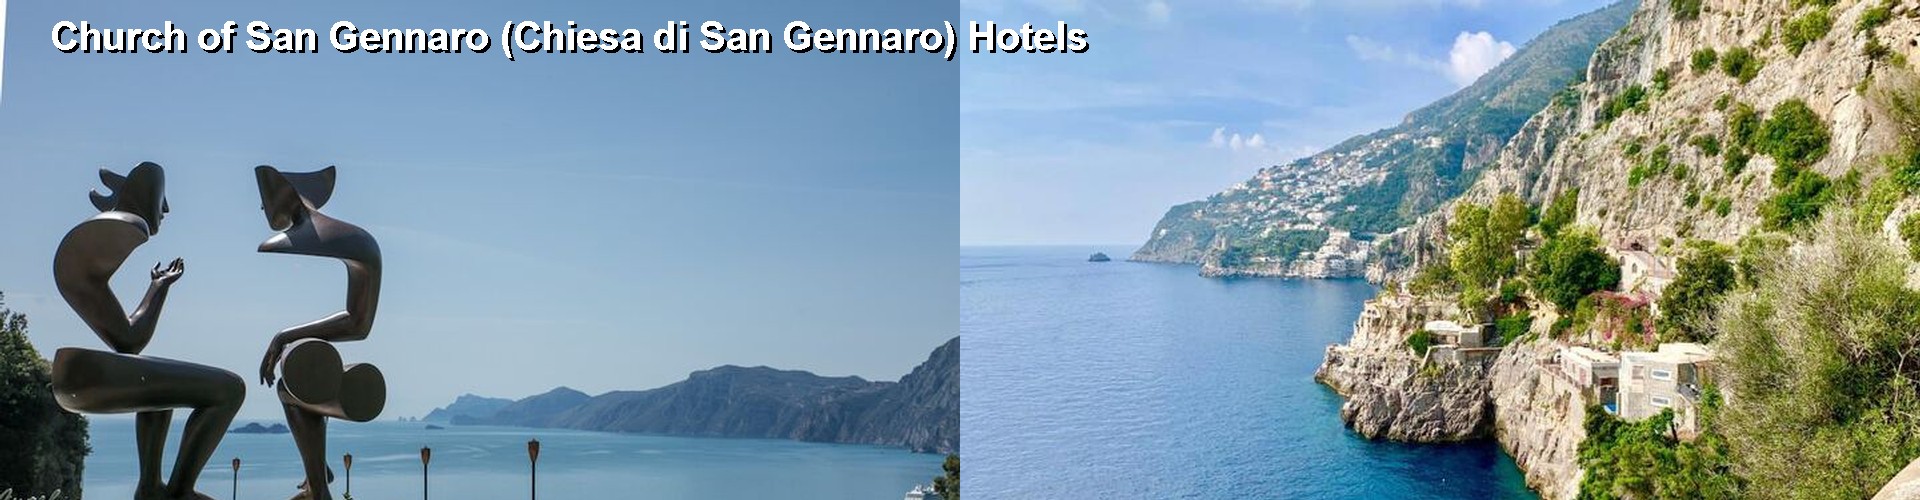 5 Best Hotels near Church of San Gennaro (Chiesa di San Gennaro)